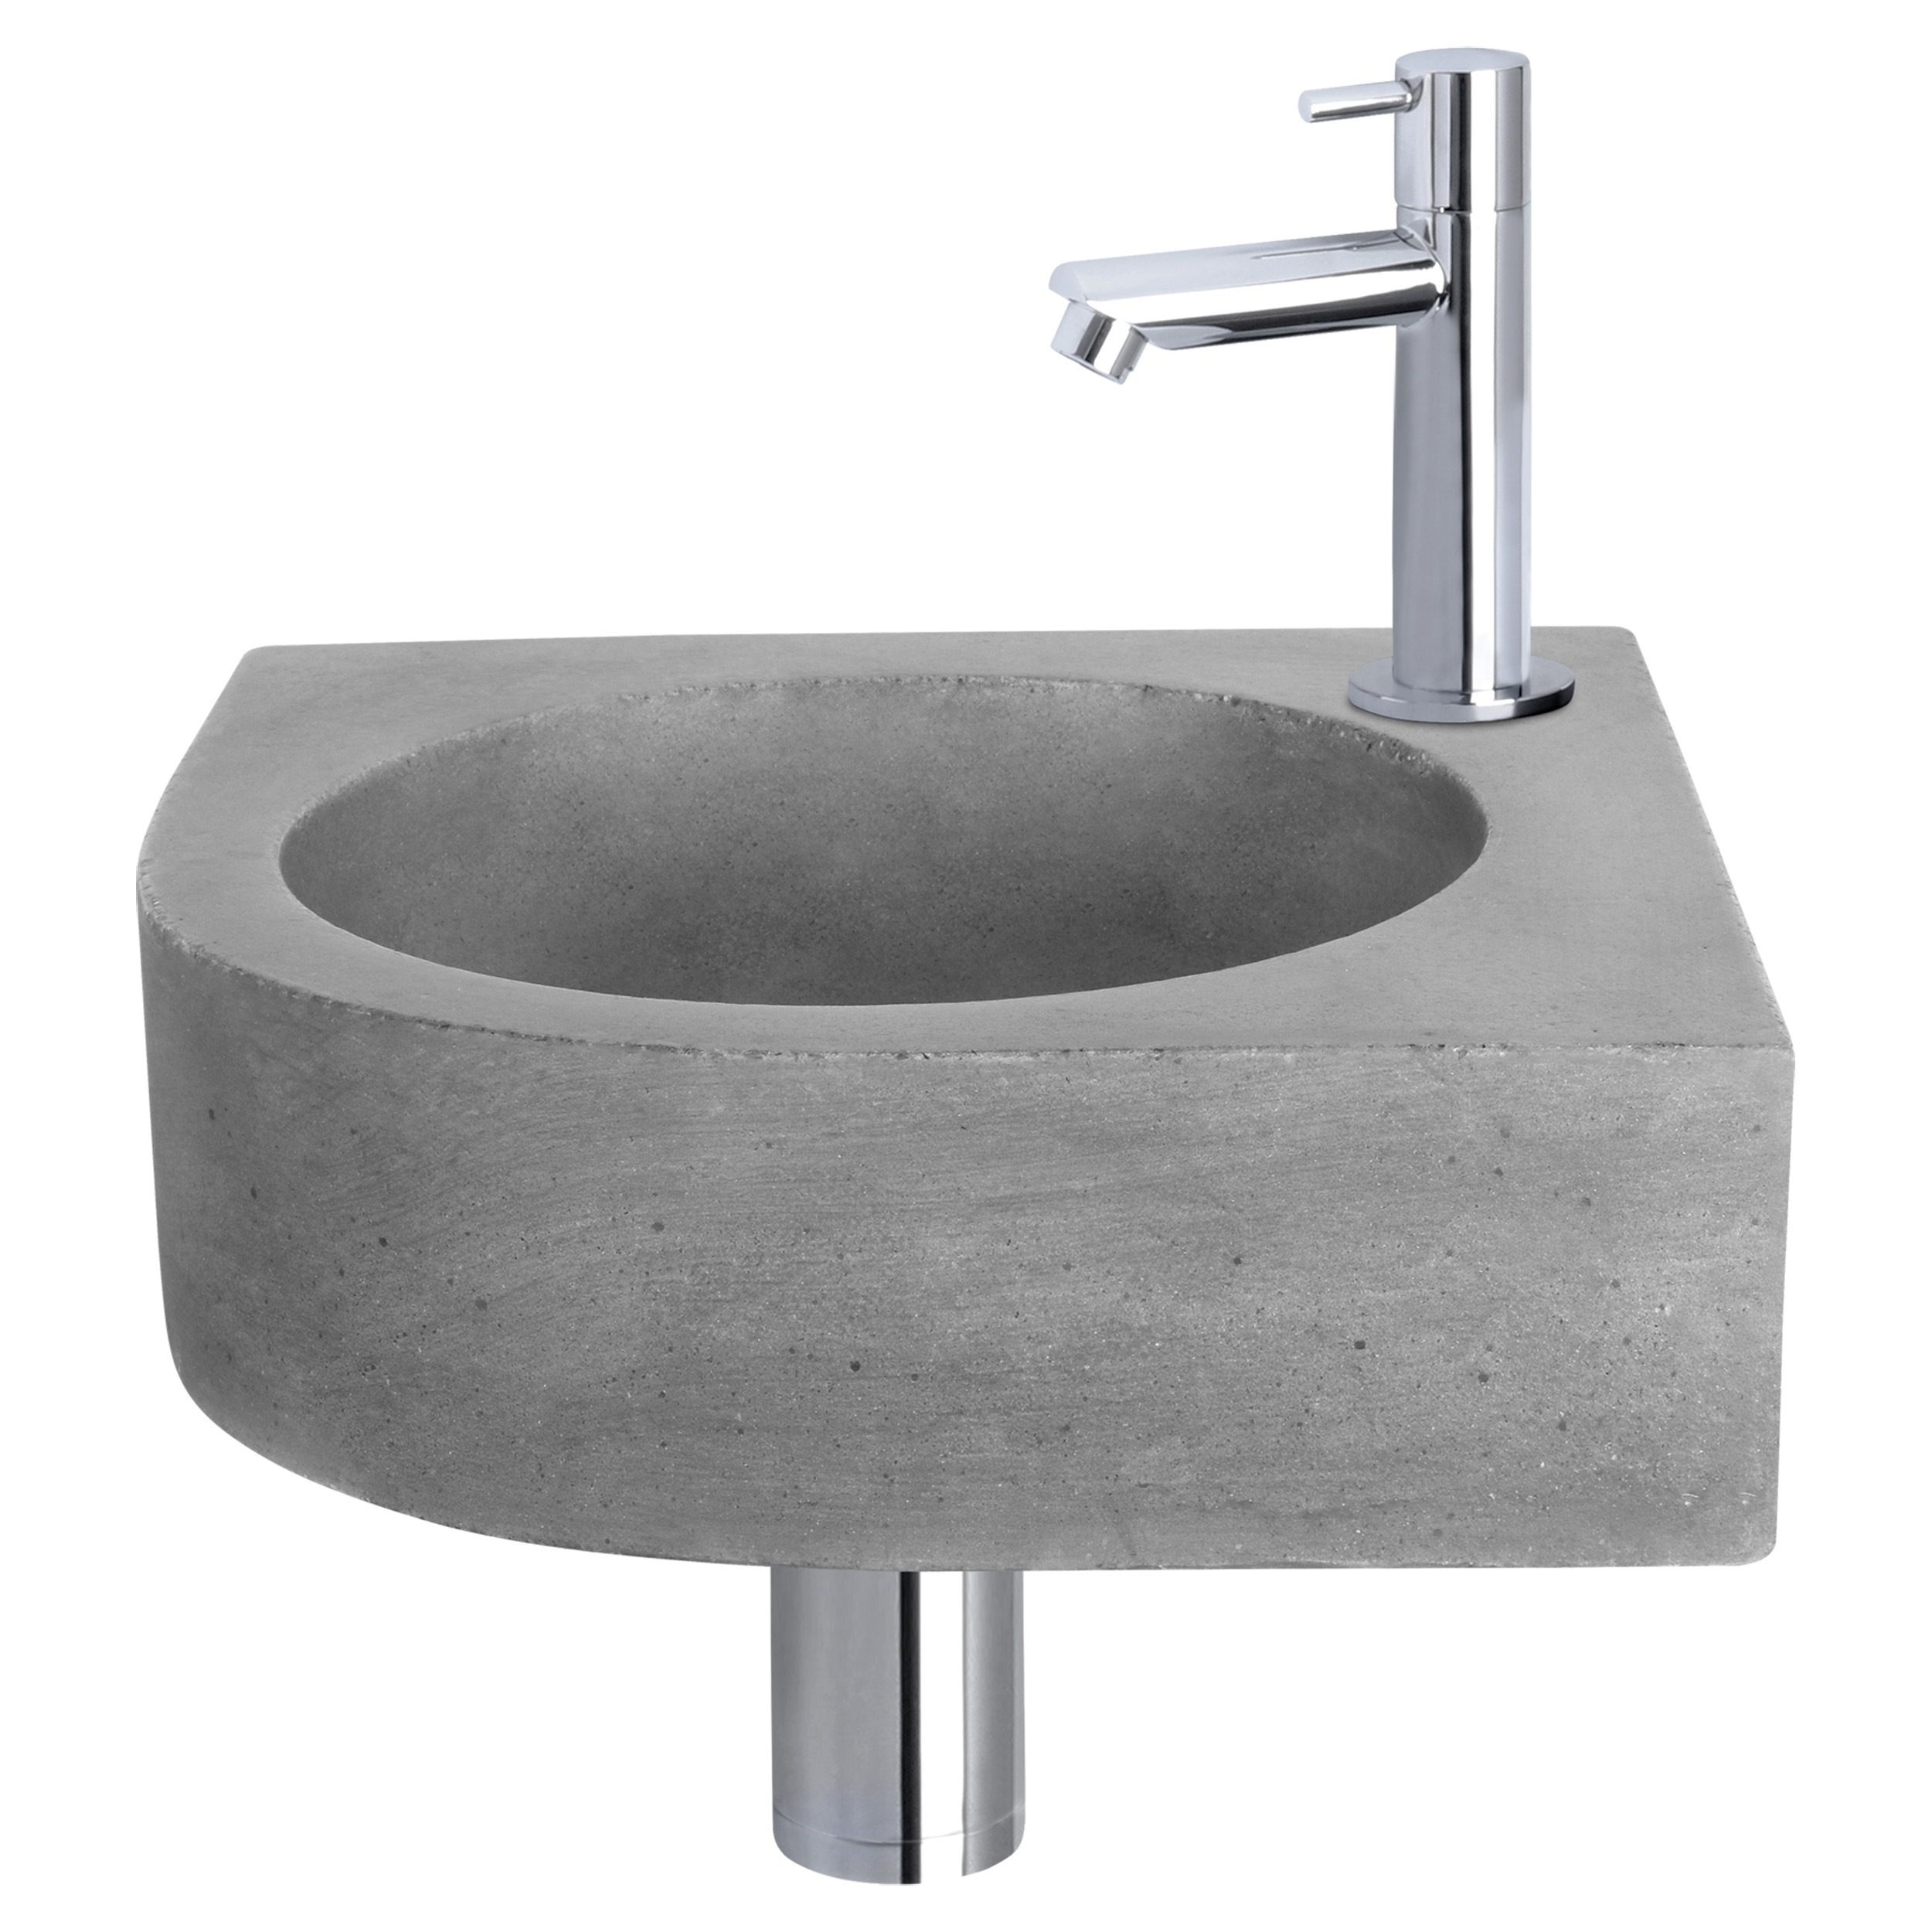 38.401.24 Differnz Cleo fonteinset beton donkergrijs - kraan recht - 31.5 x 31.5 x 10 cm - chroom